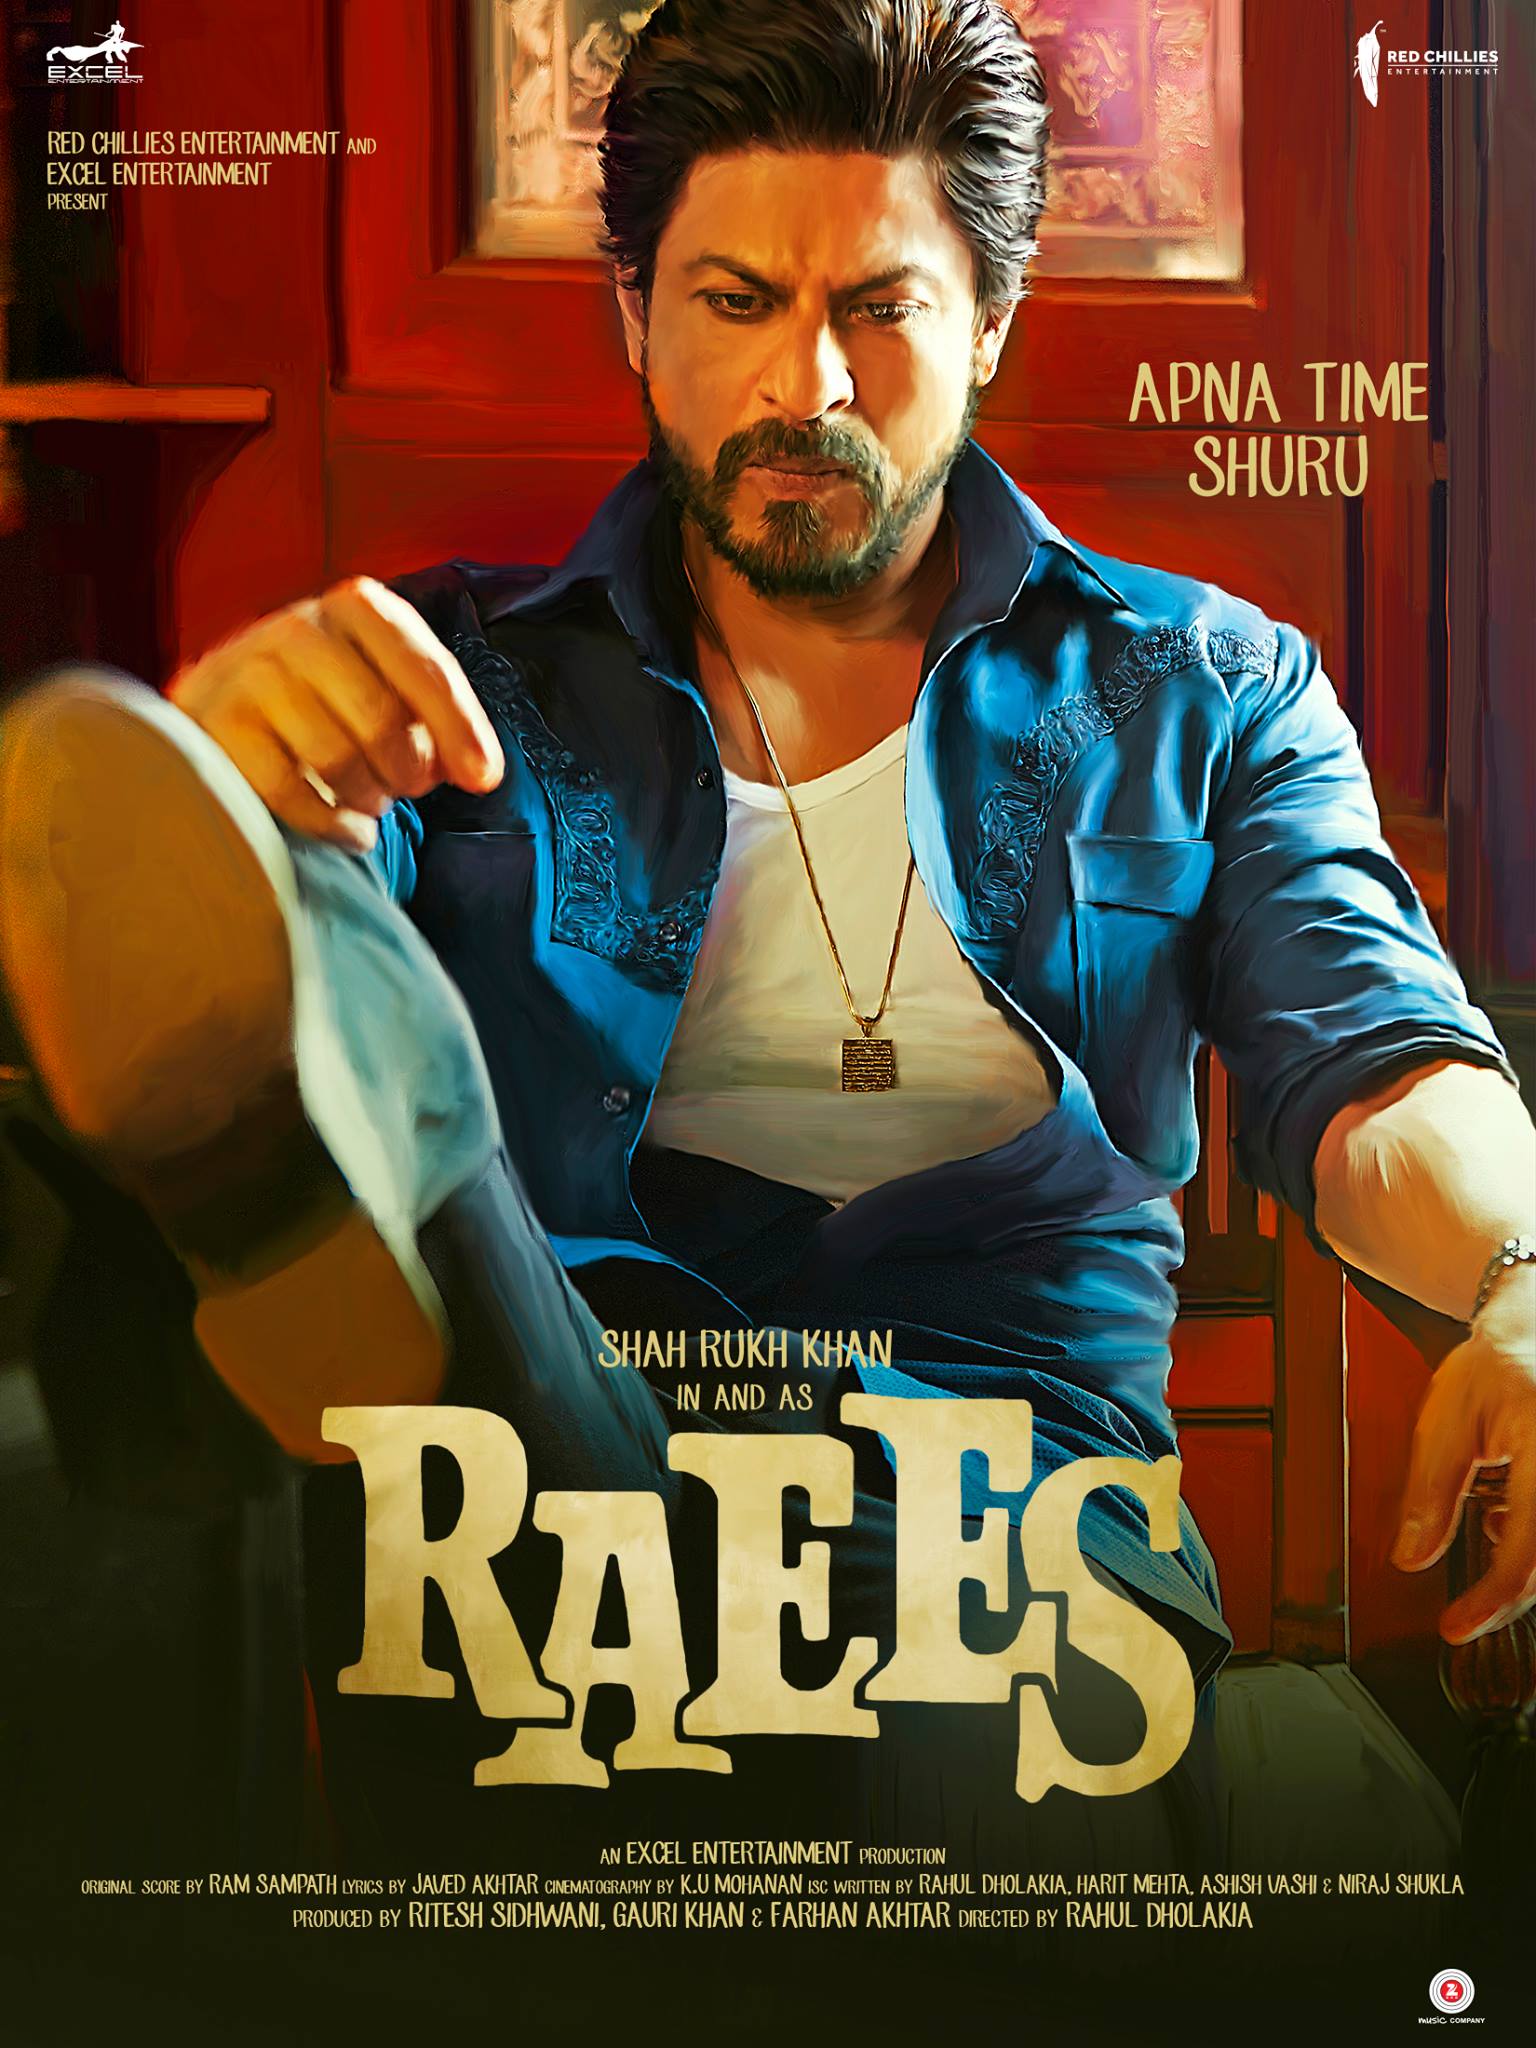 Raees Shah Rukh Khan movies